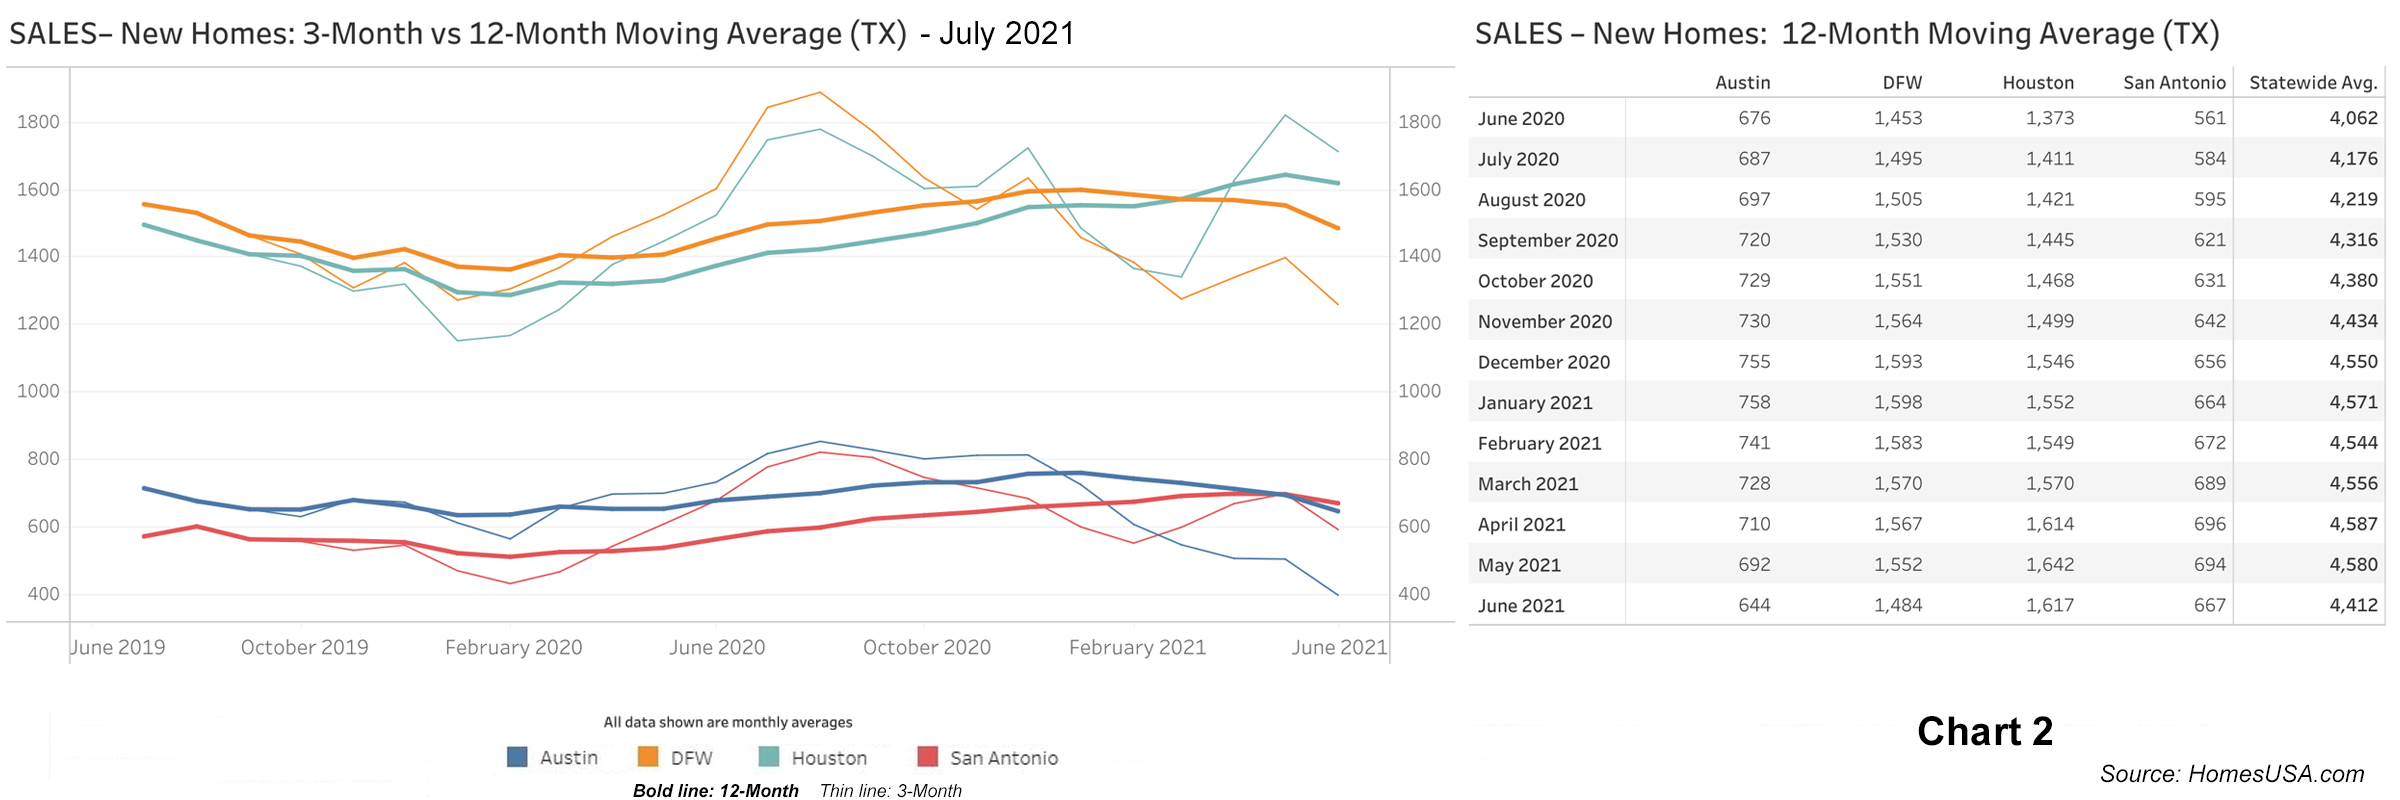 Chart 2: Texas New Home Sales - June 2021